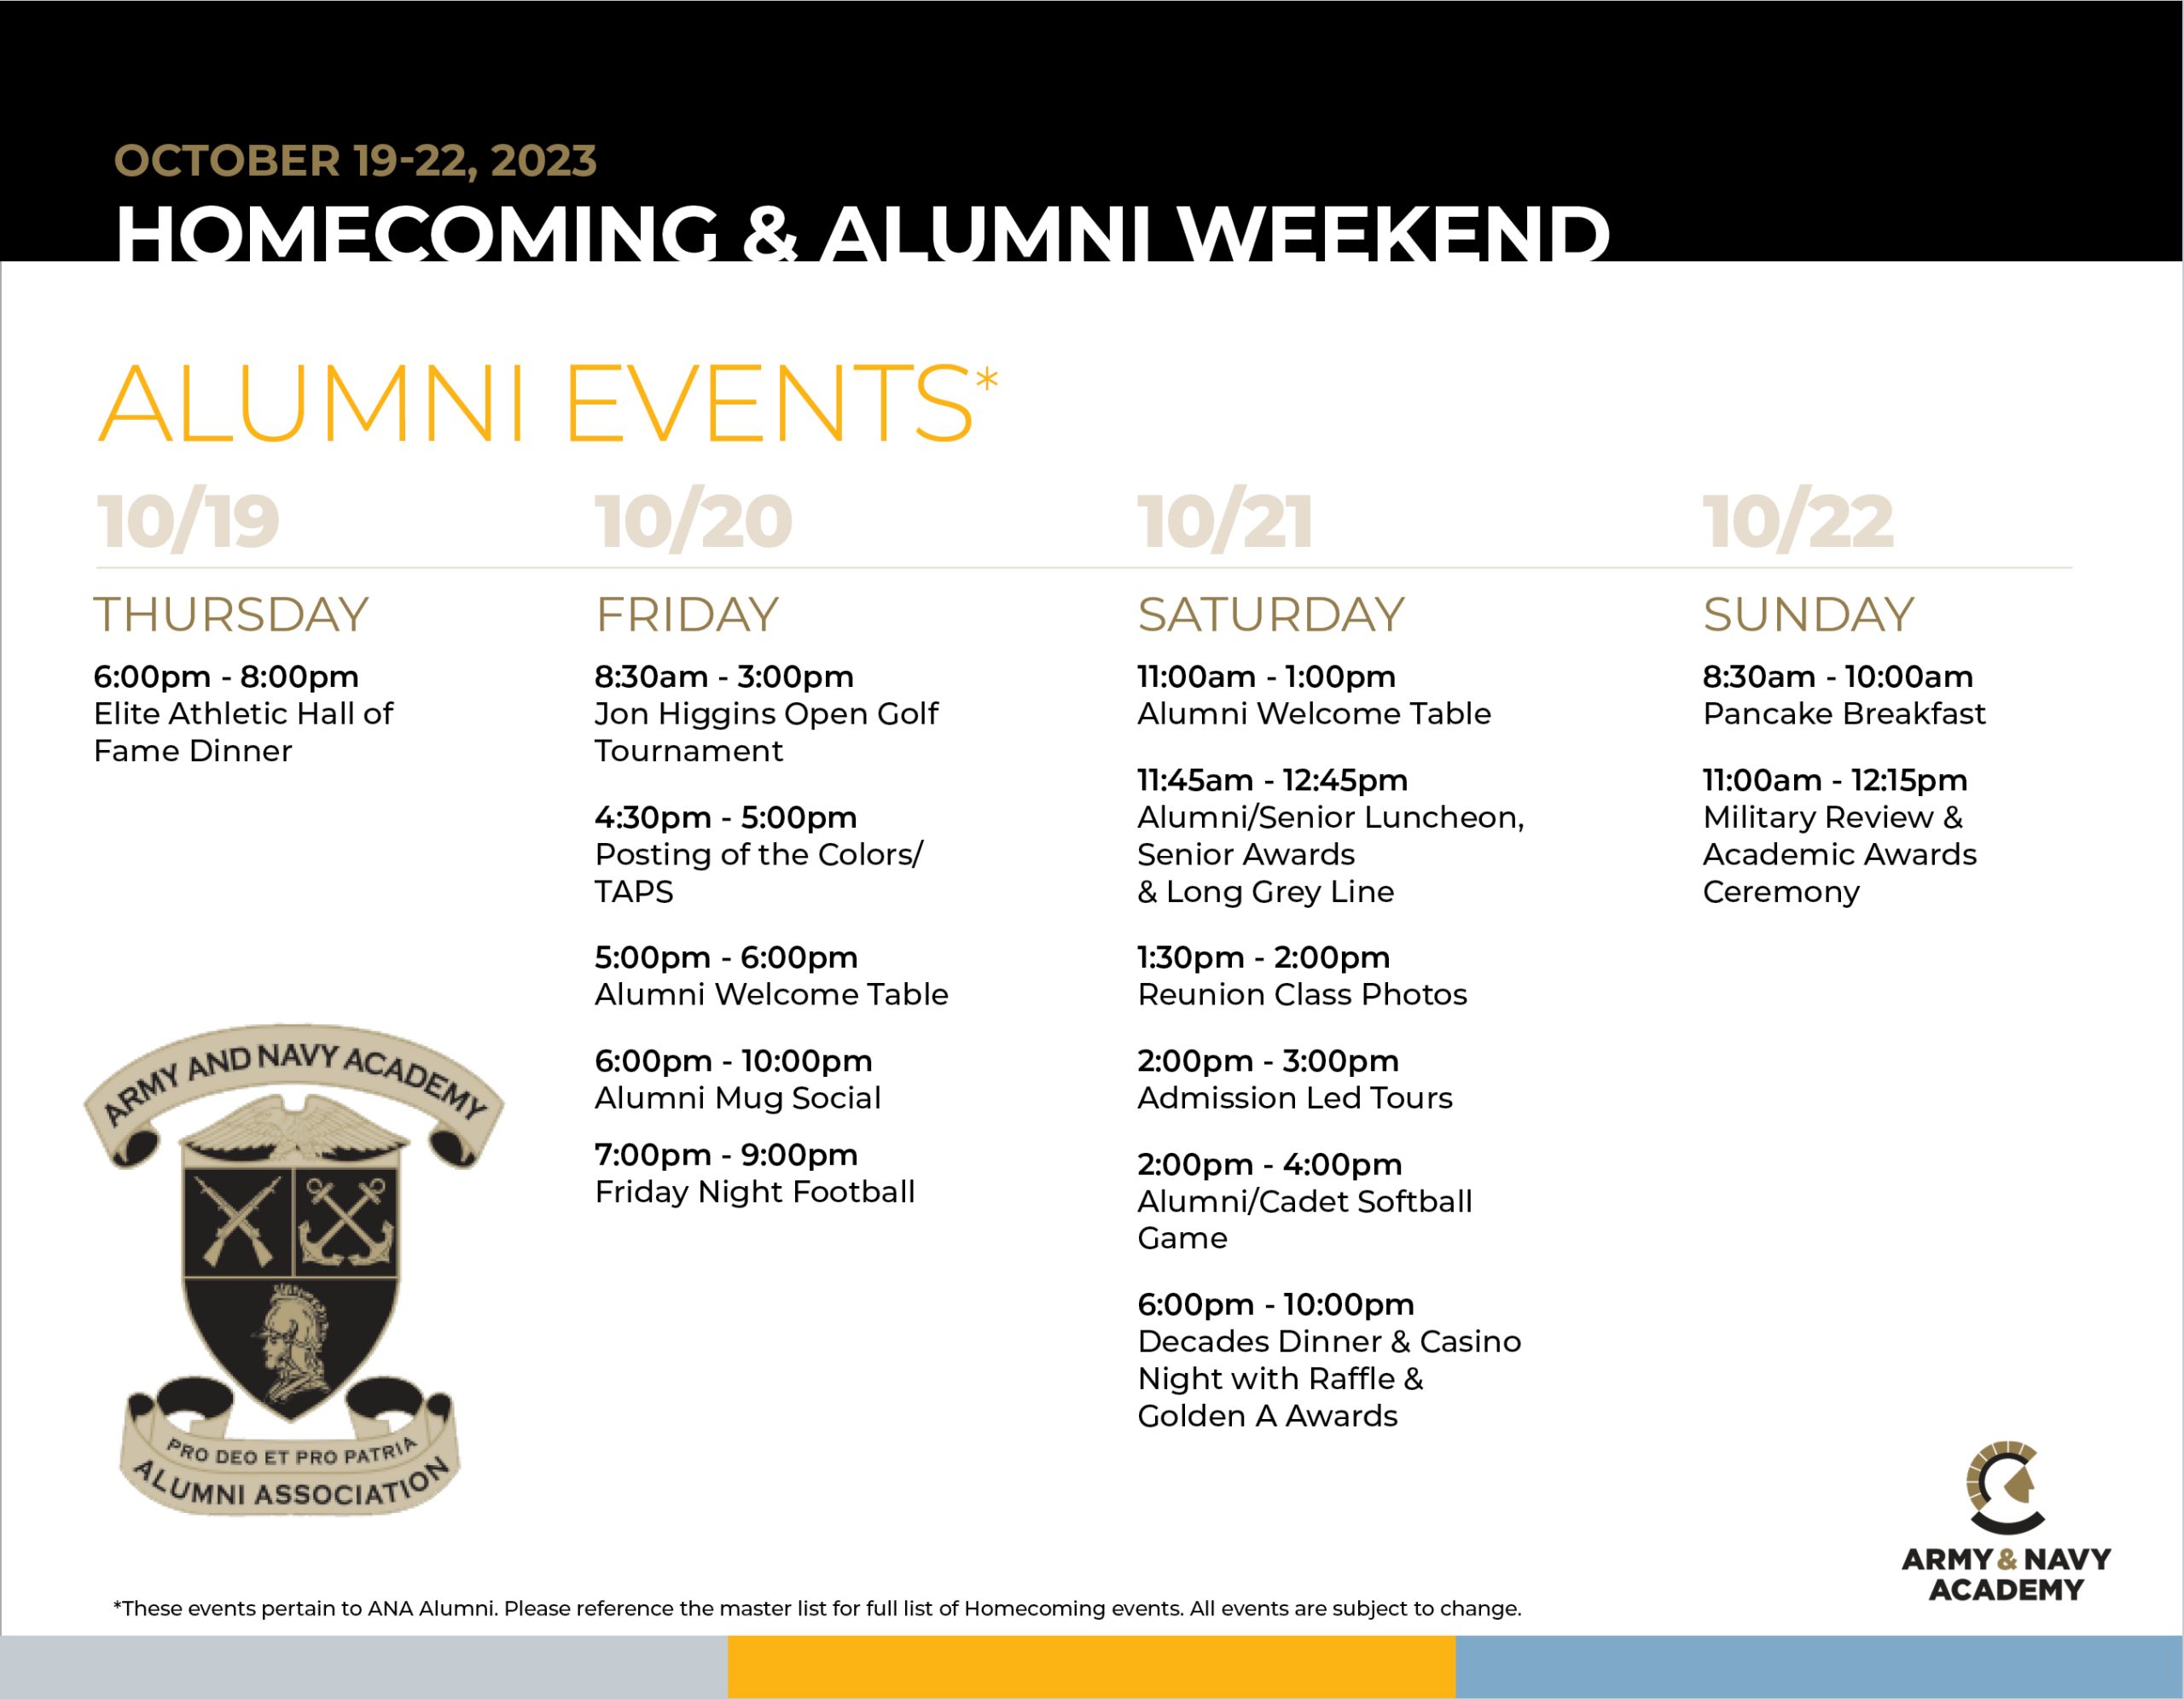 Schedule of alumni events for Homecoming/Alumni Weekend 2023